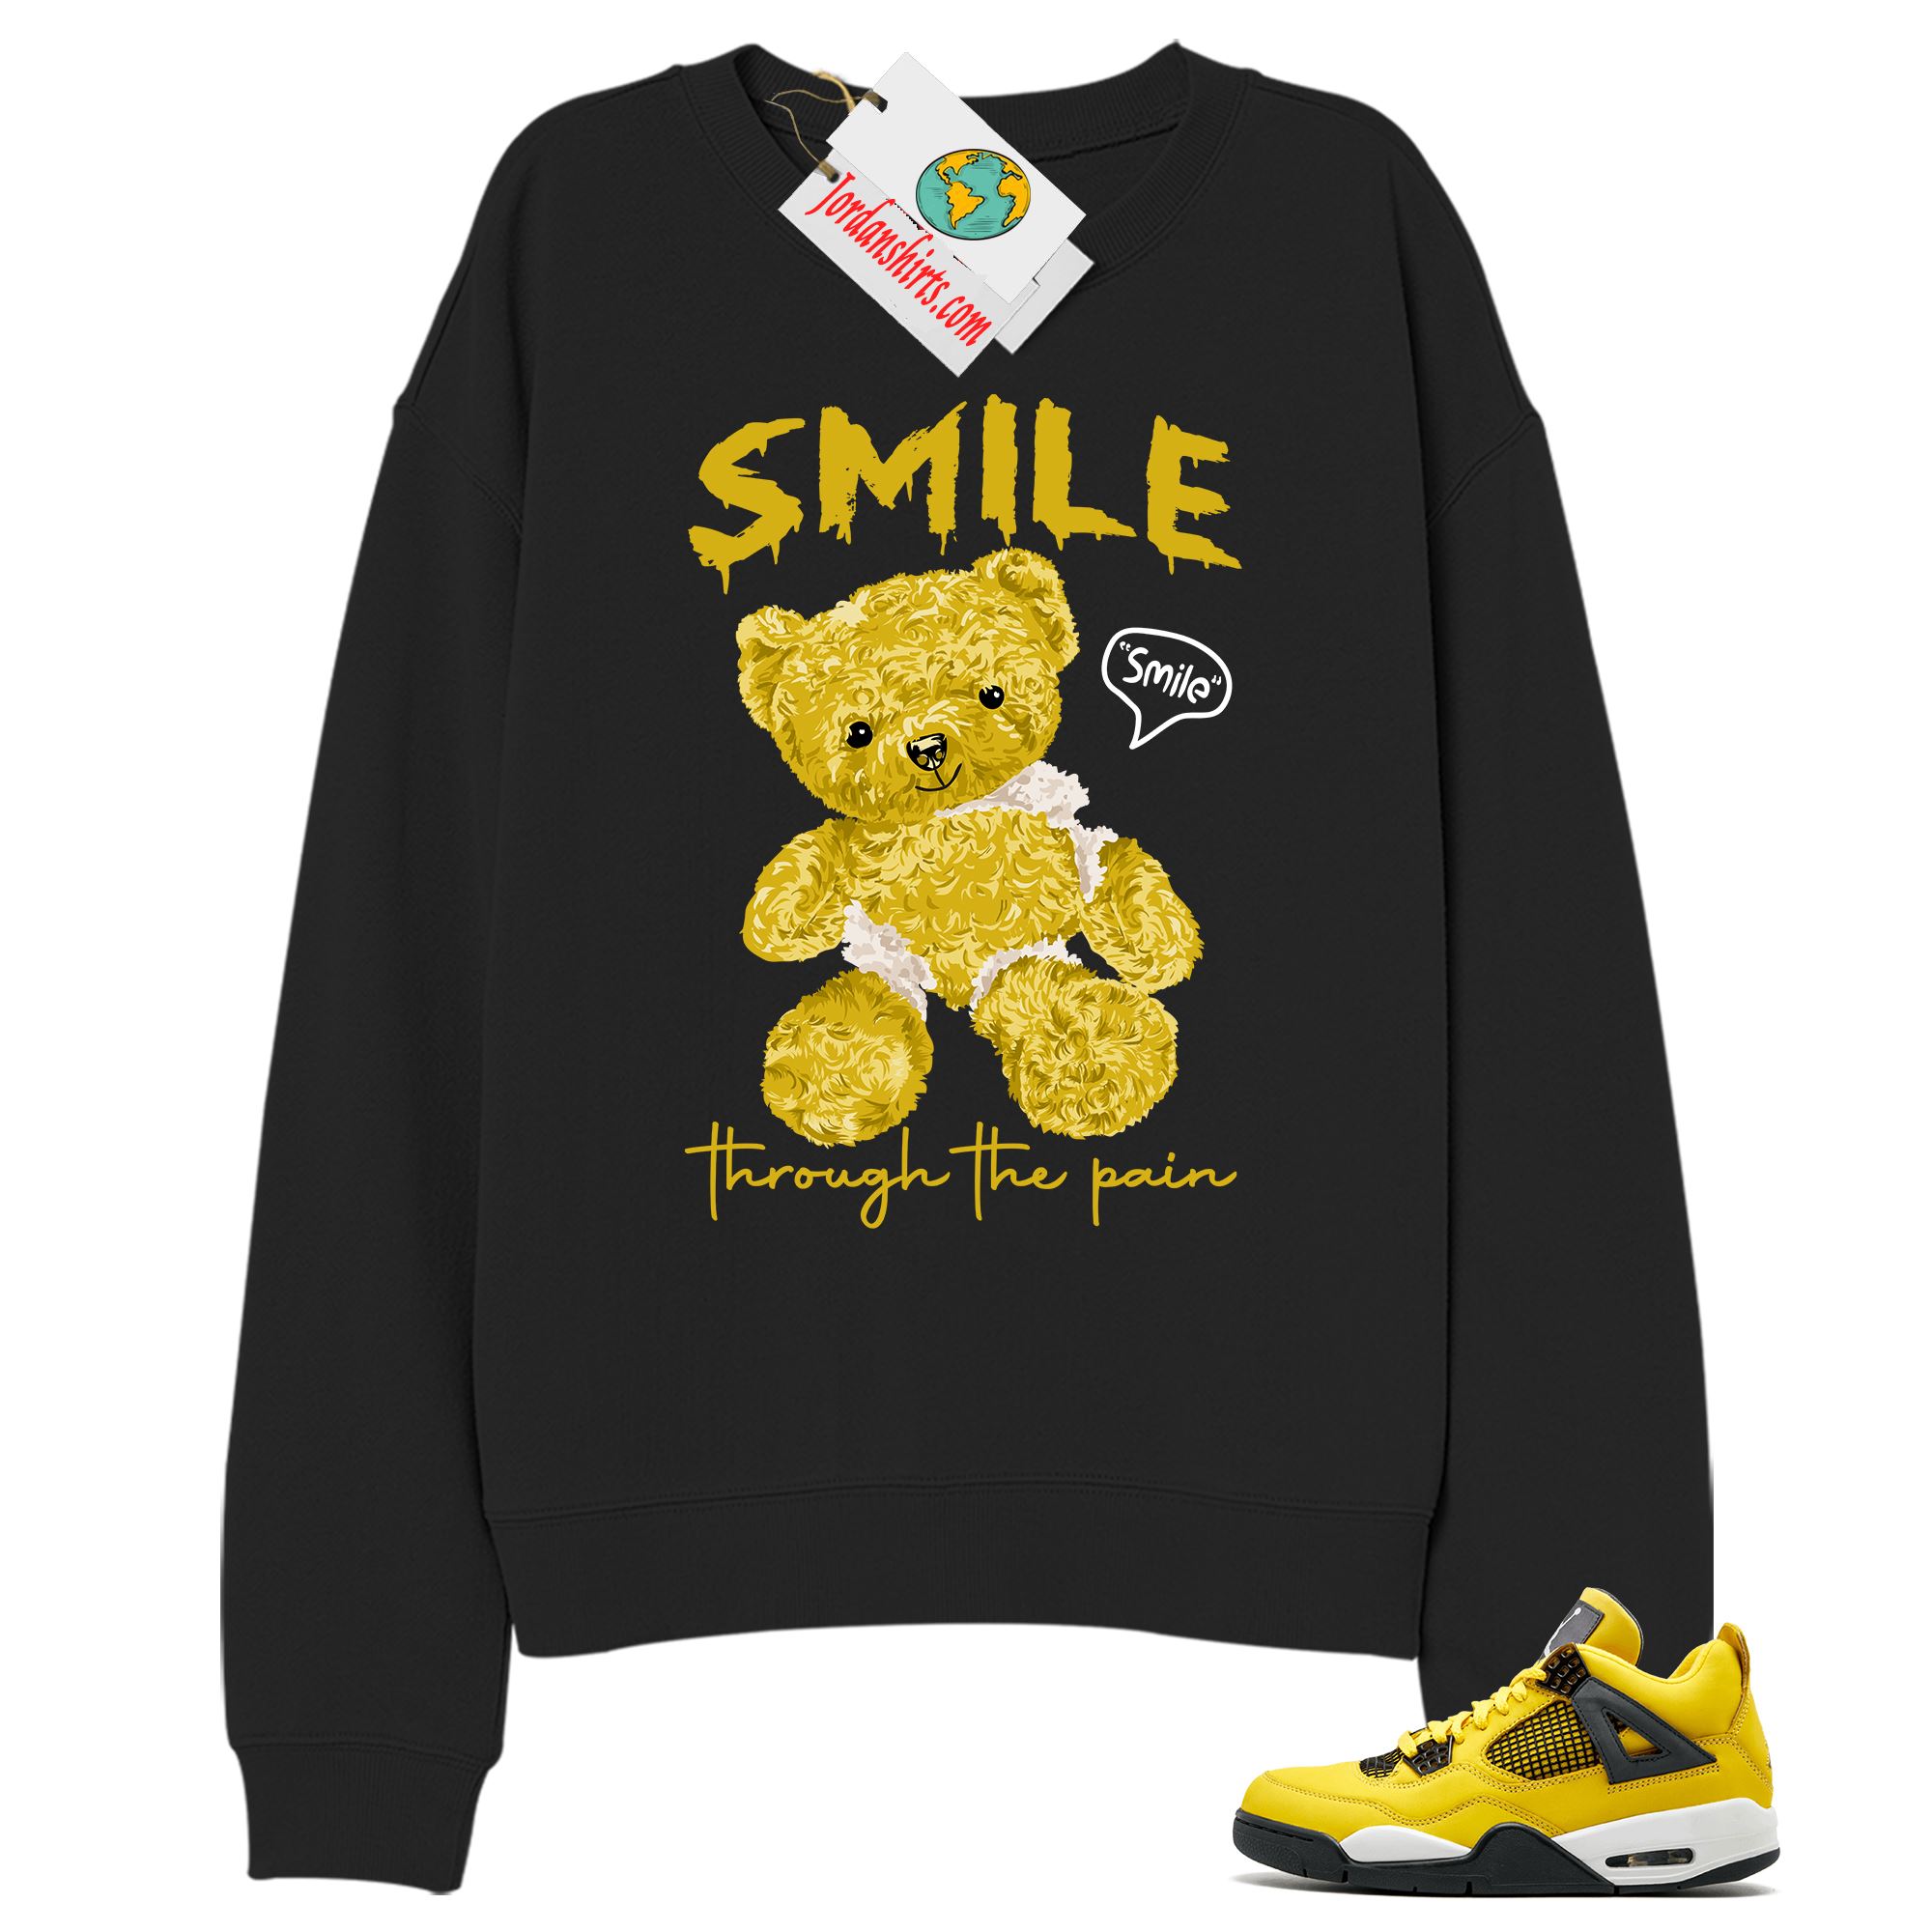 Jordan 4 Sweatshirt, Teddy Bear Broken Heart Black Sweatshirt Air Jordan 4 Tour Yellow Lightning 4s-trungten-3ohcz Plus Size Up To 5xl